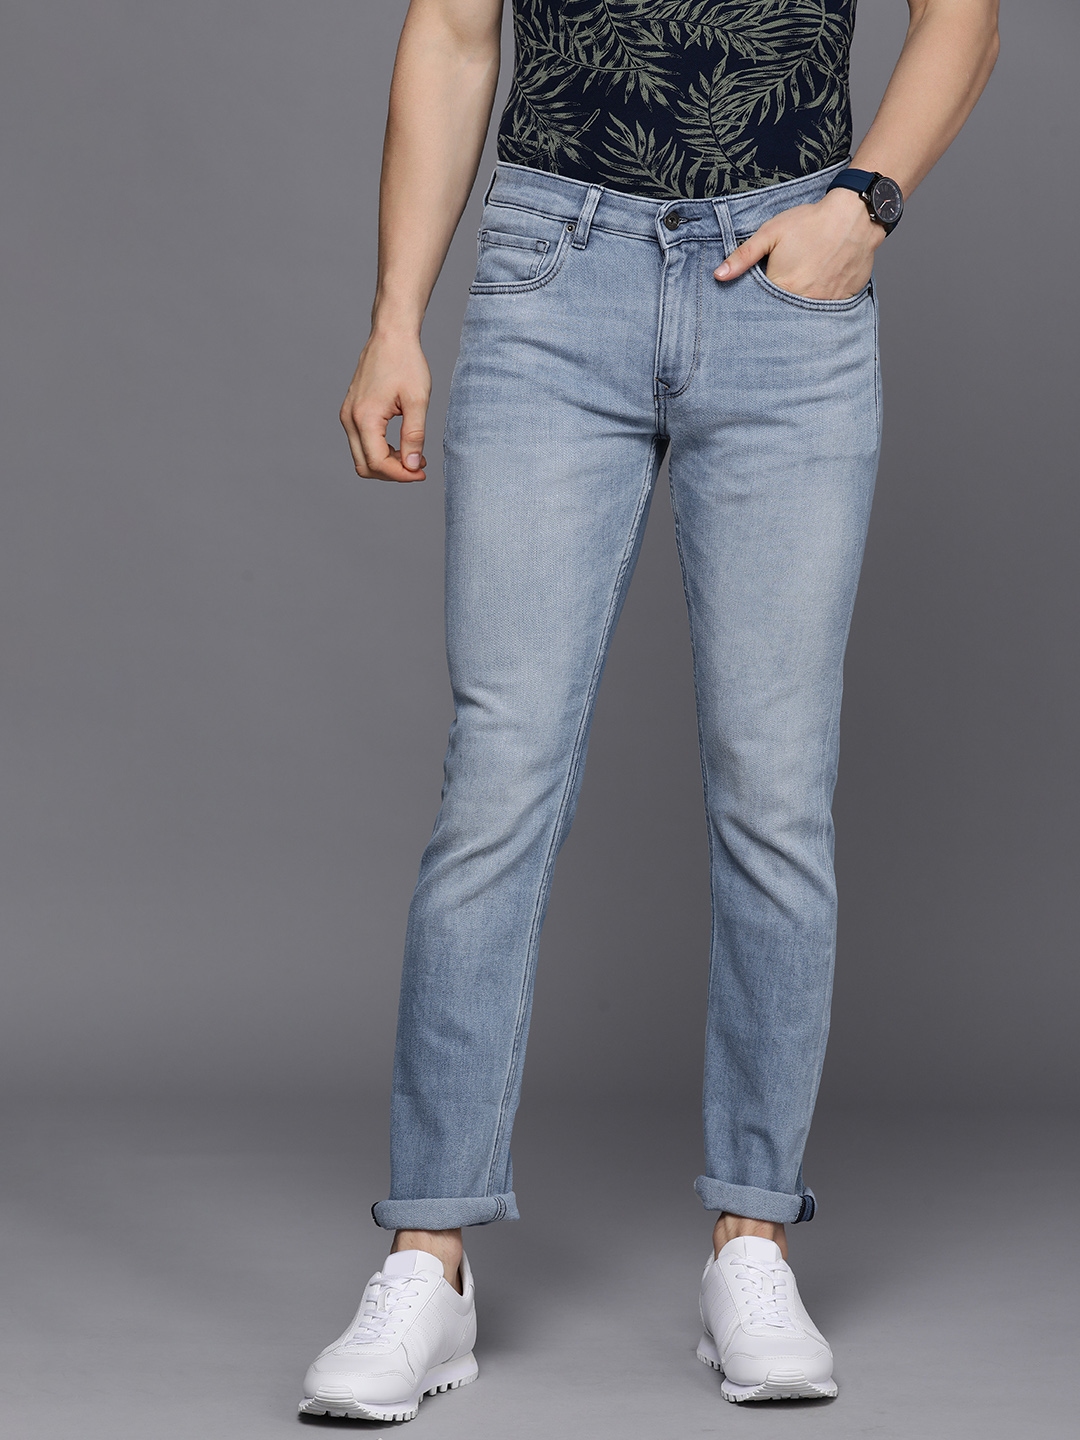 Louis Philippe Jeans Blue Regular Fit Jeans